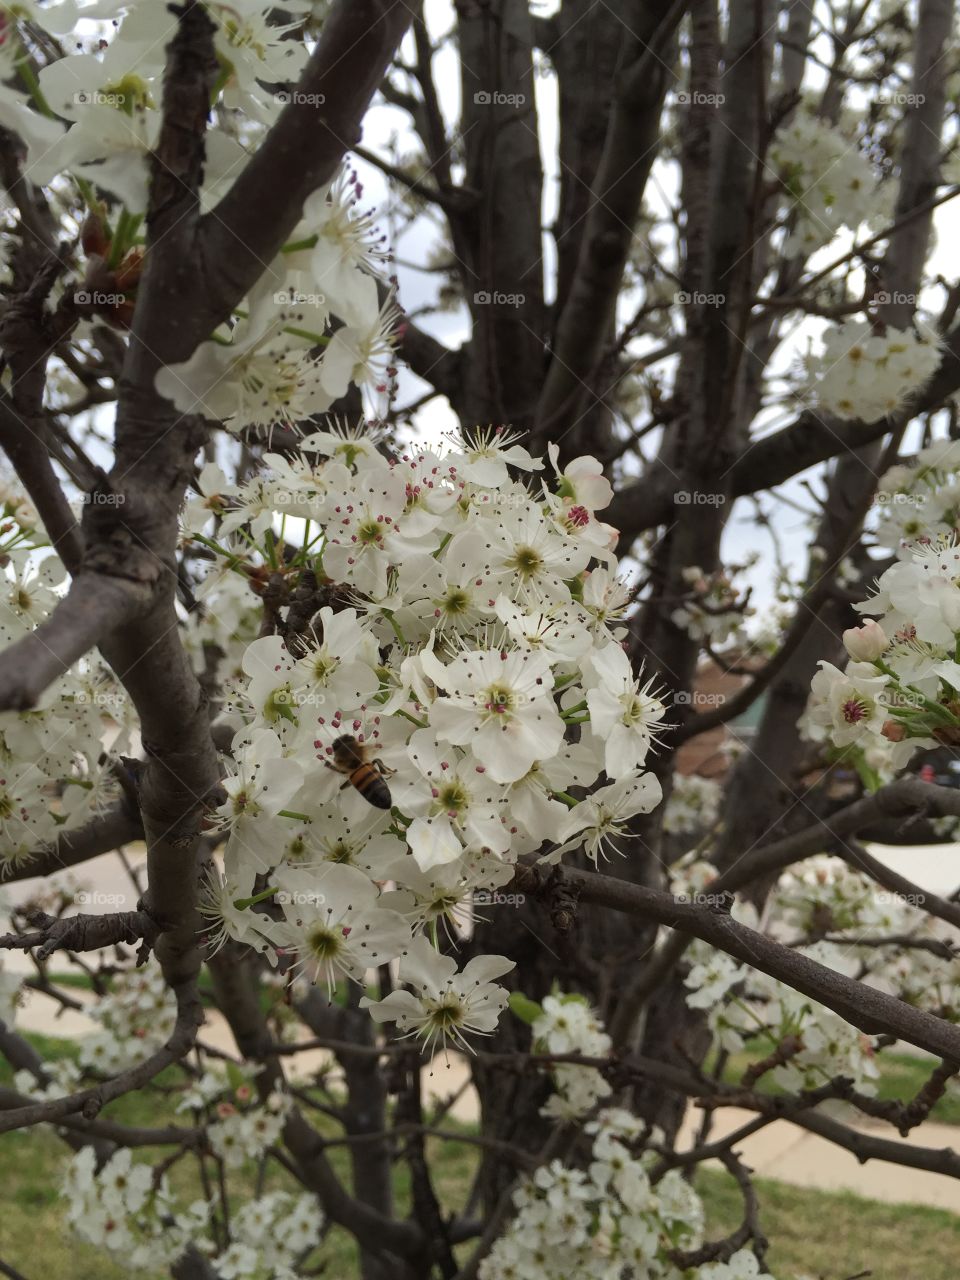 Bee & Bradford Pear Tree Blooms